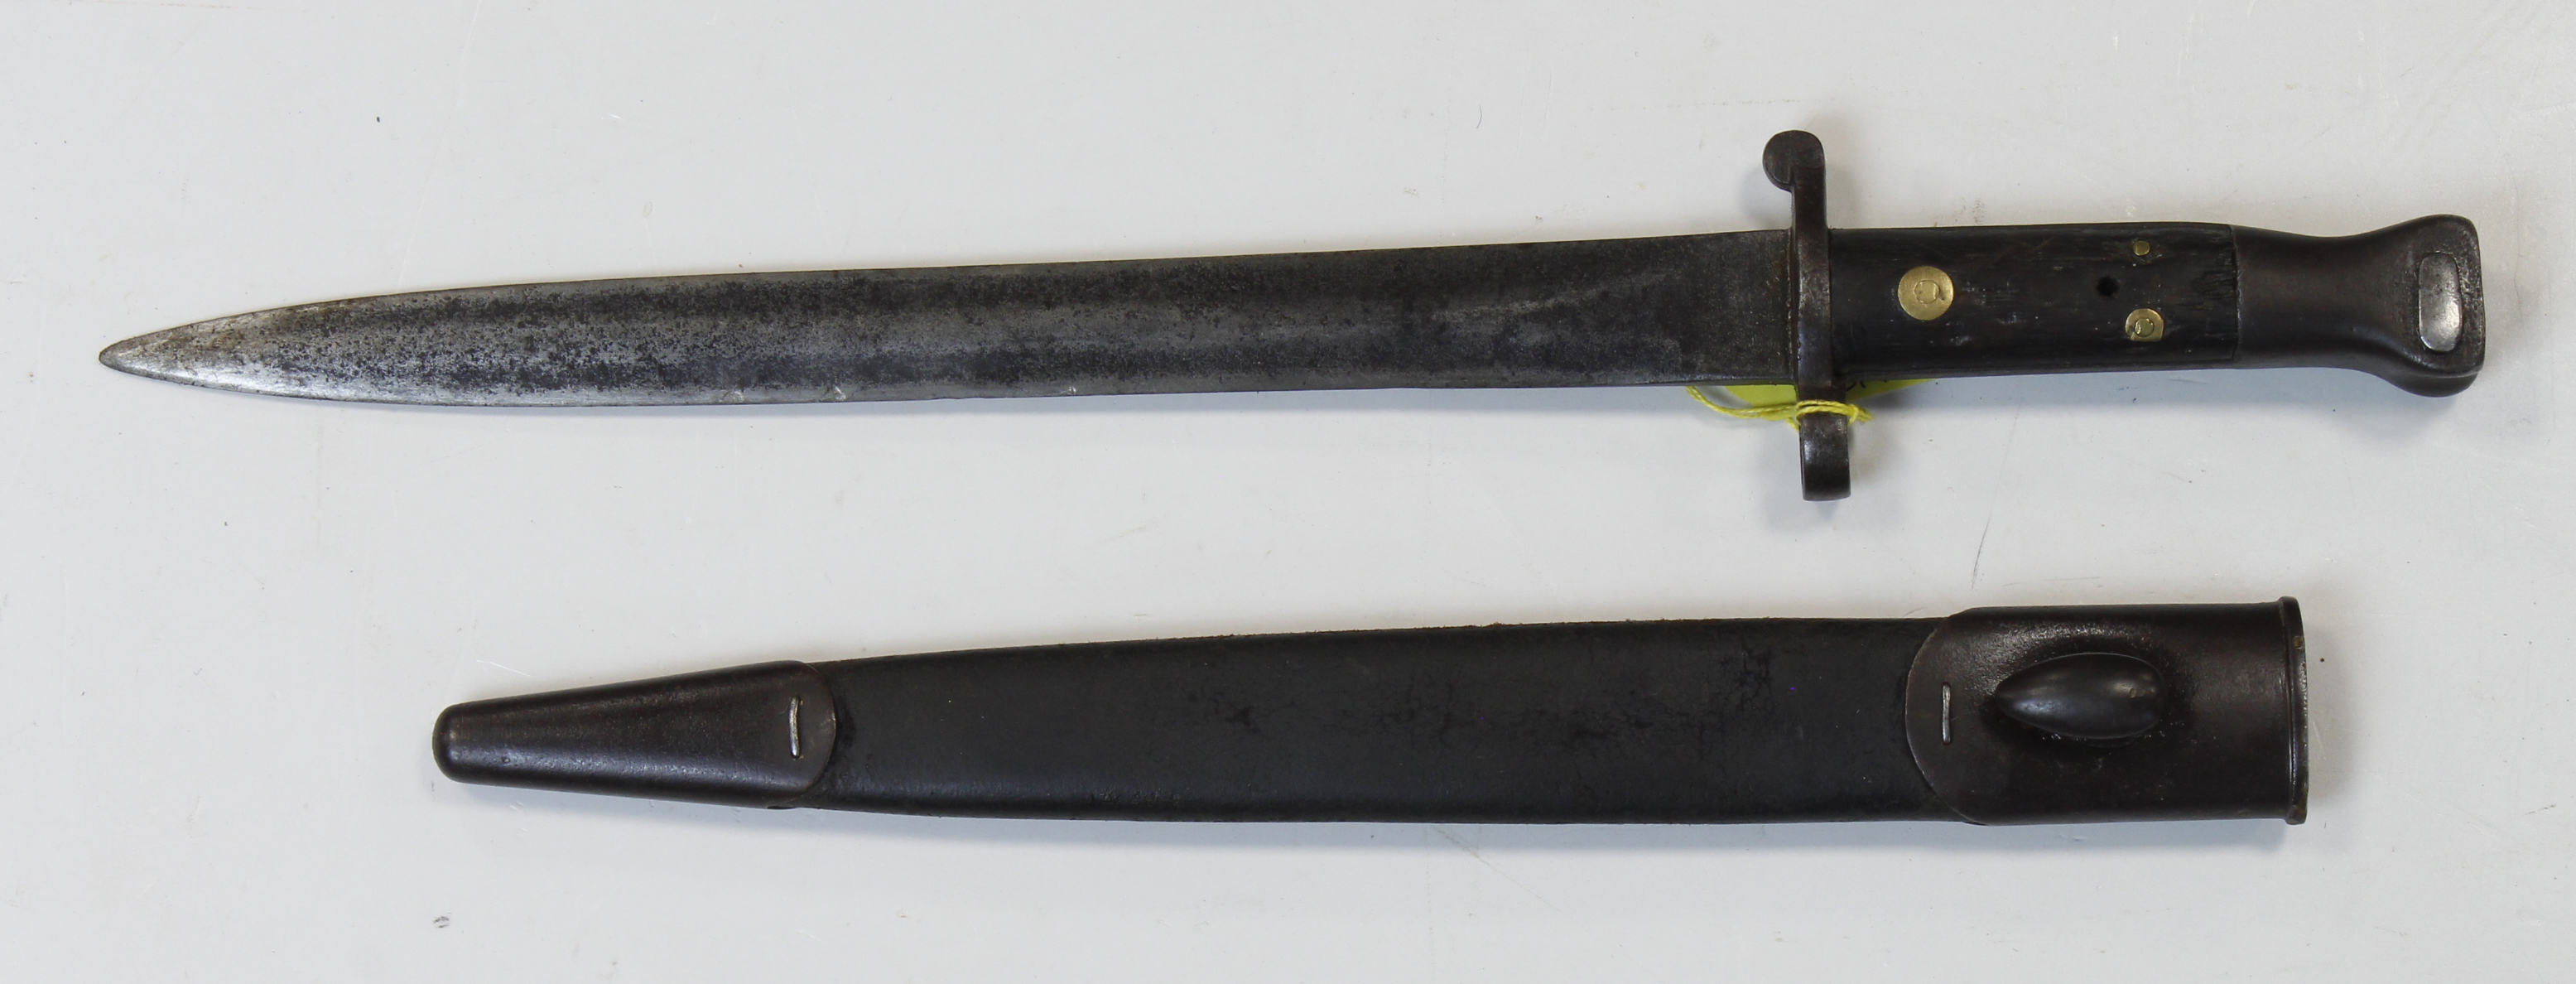 Scarce three Rivot 1888 bayonet, button frozen, with scabbard